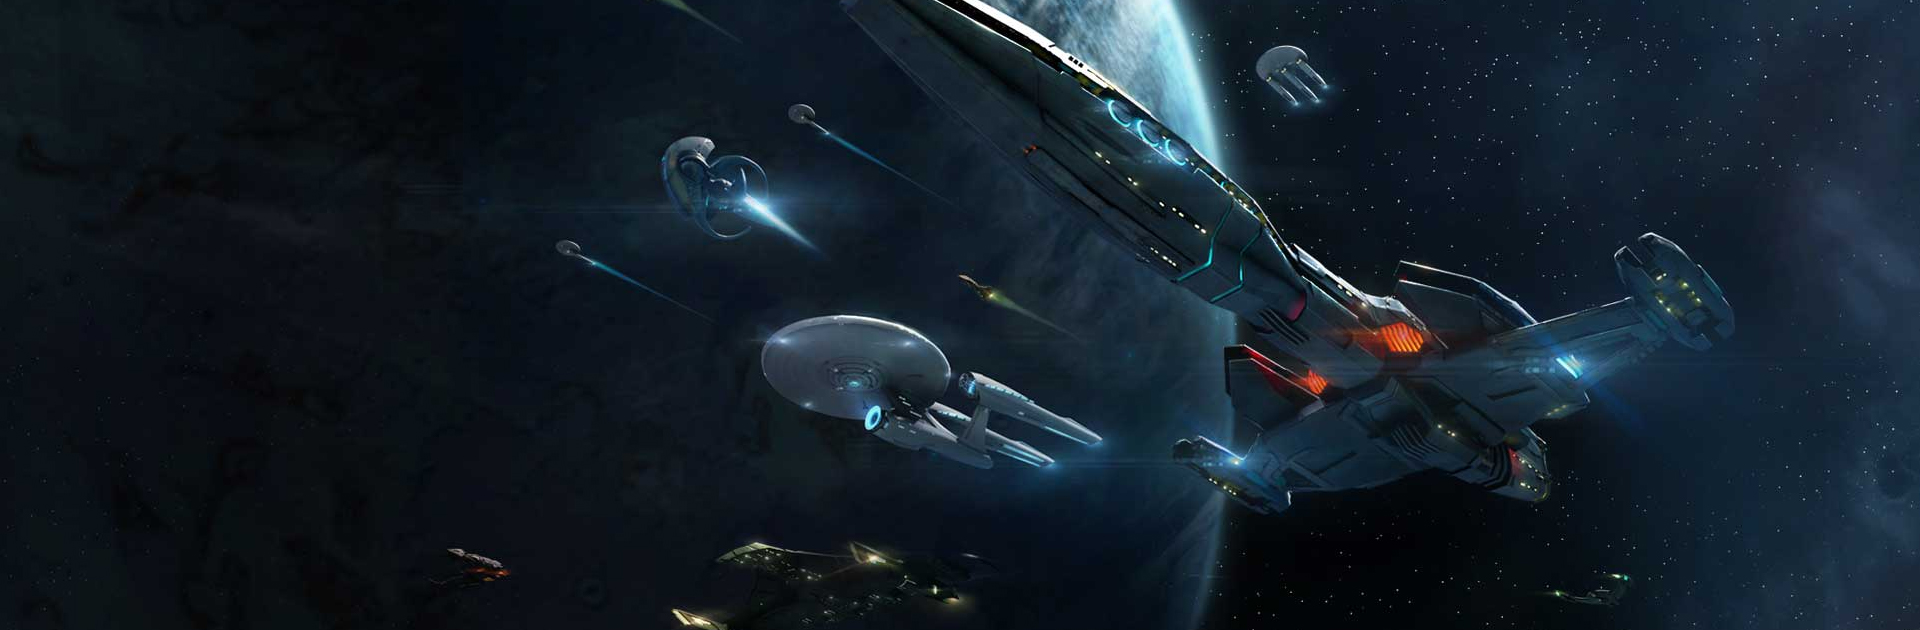 Download & Play Star Trek Fleet on PC & Mac (Emulator)